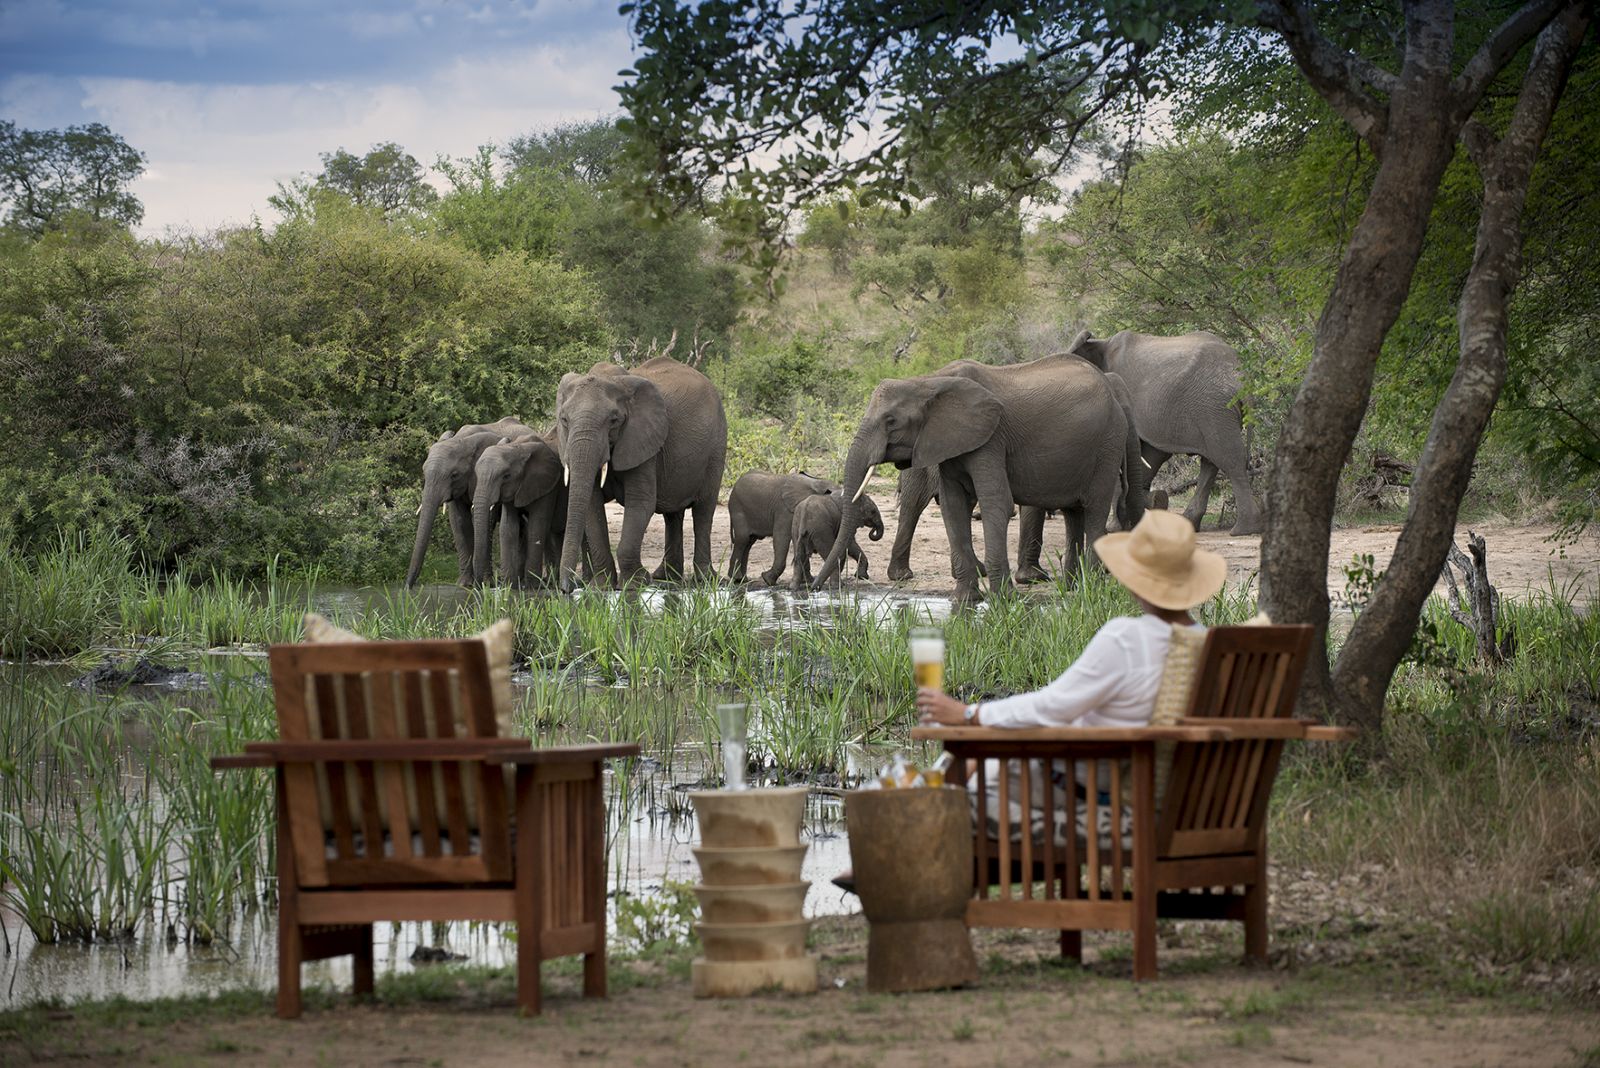 Game viewing of elephants at Tanda Tula Safari Camp in South Africa 